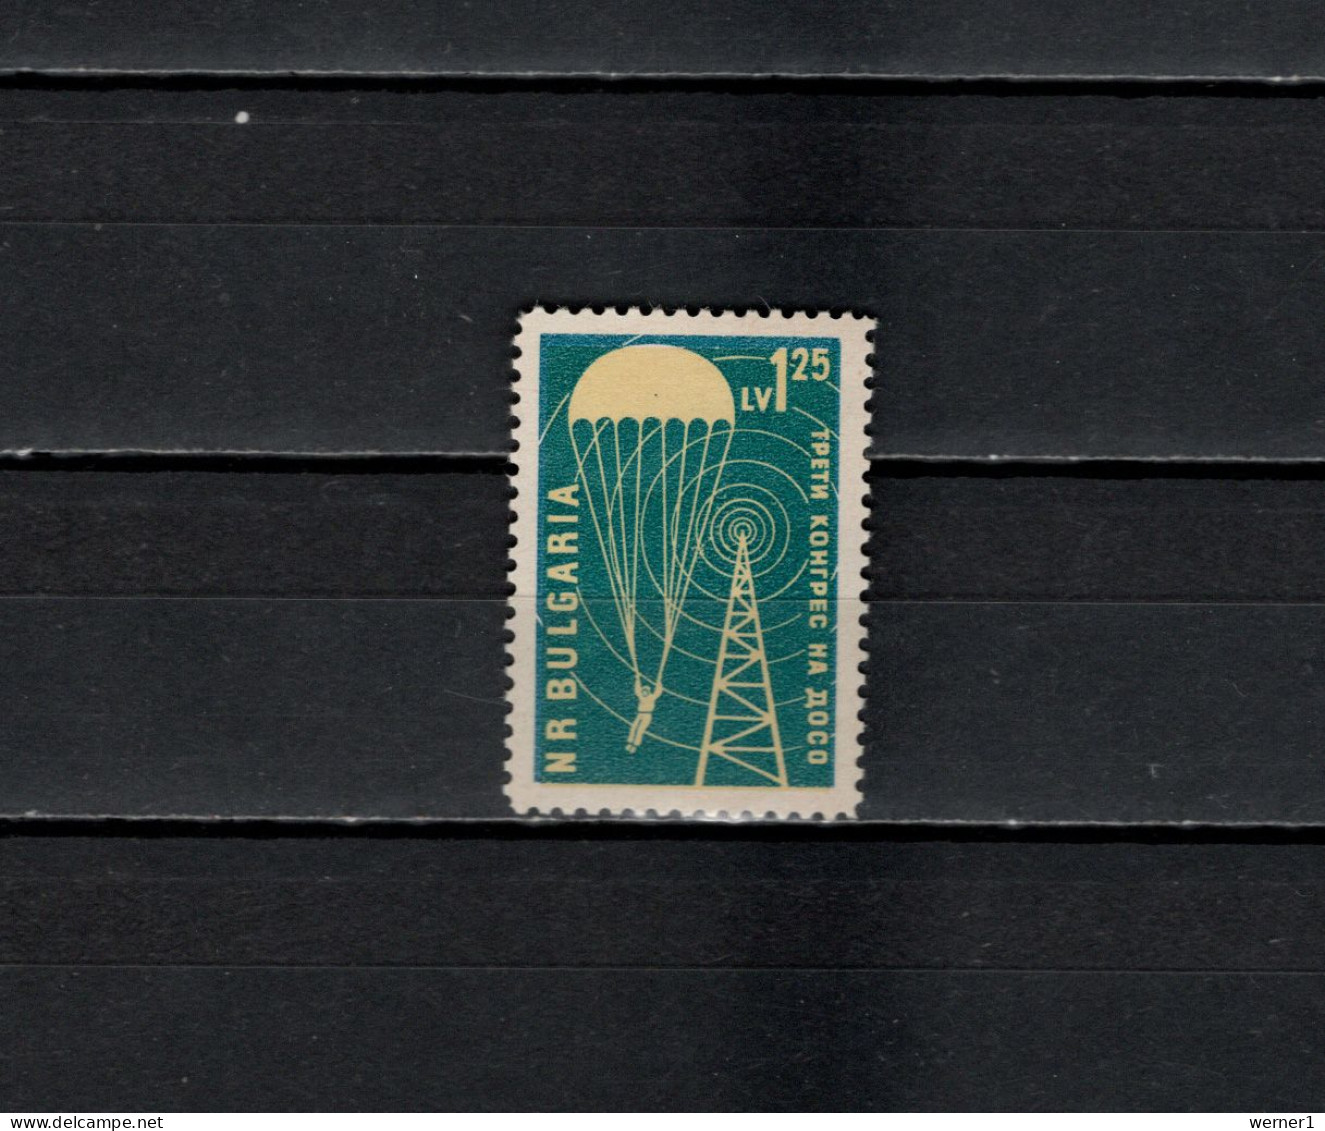 Bulgaria 1959 Space, DOSO 1.25L Stamp MNH - Europa